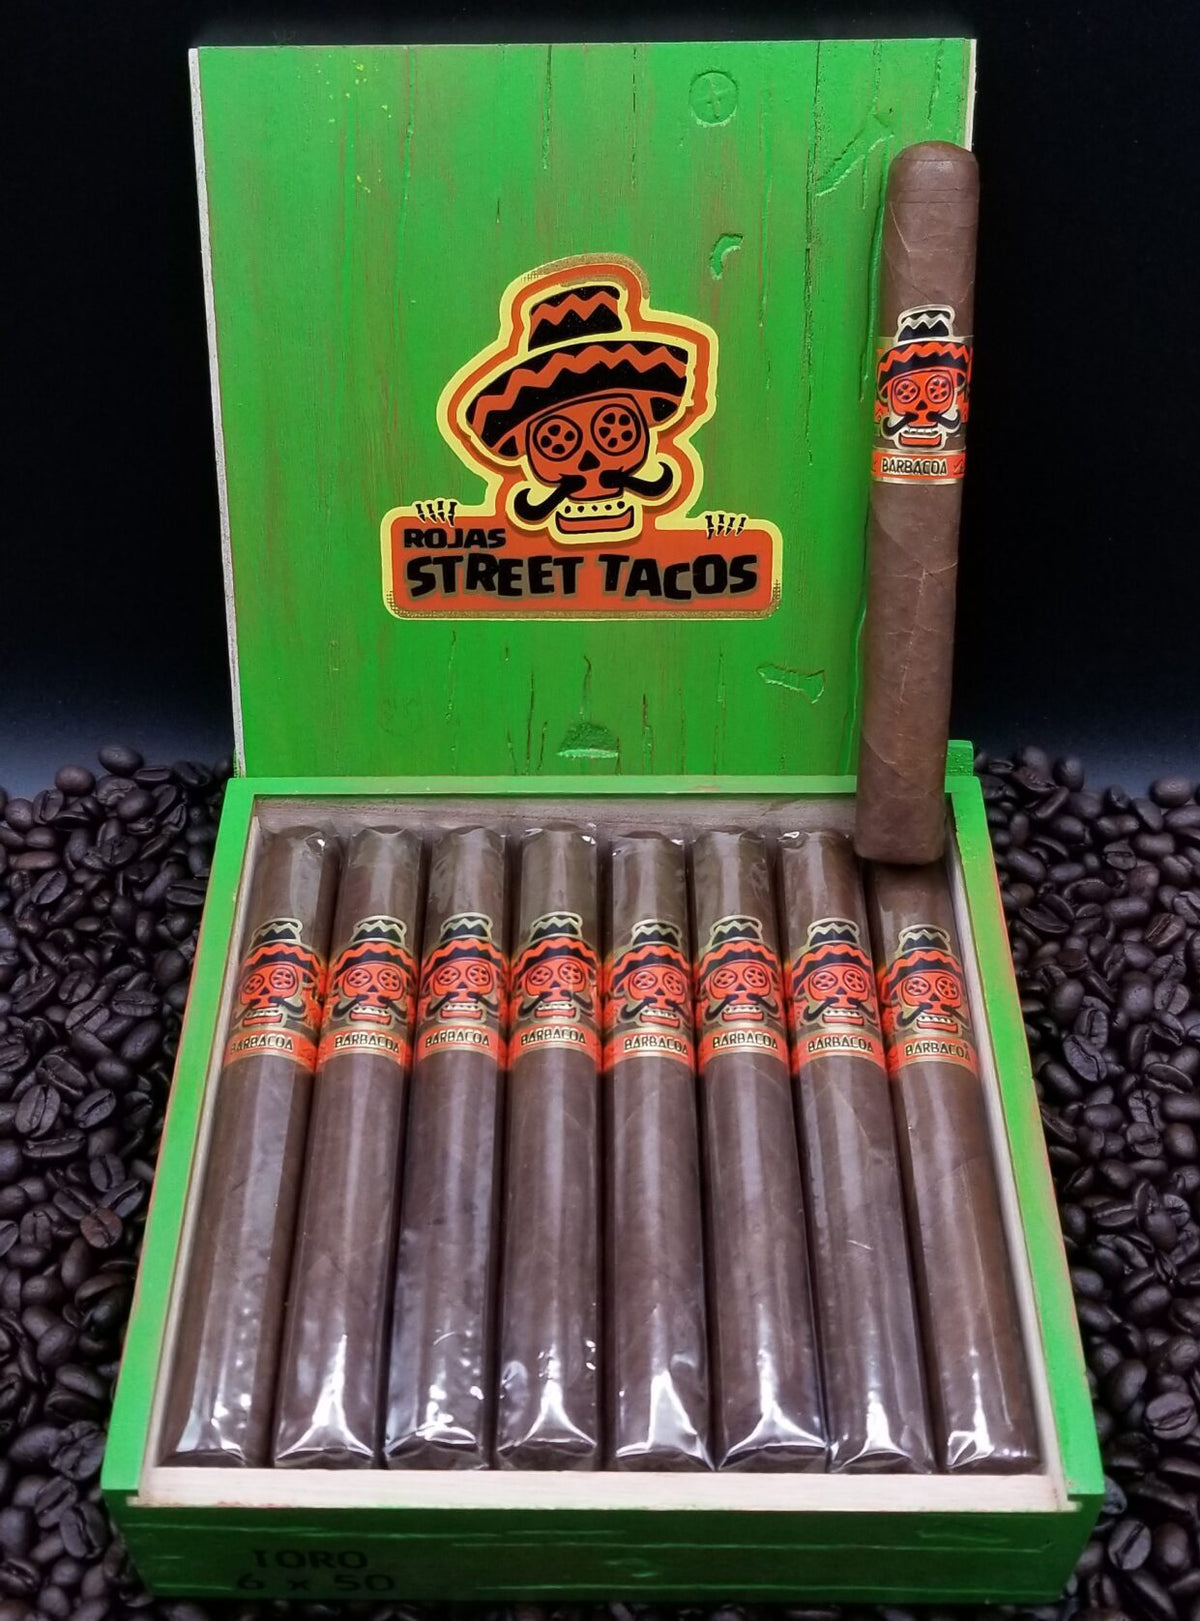 Rojas Street Taco Toro cigars supplied by Sir Louis Cigars